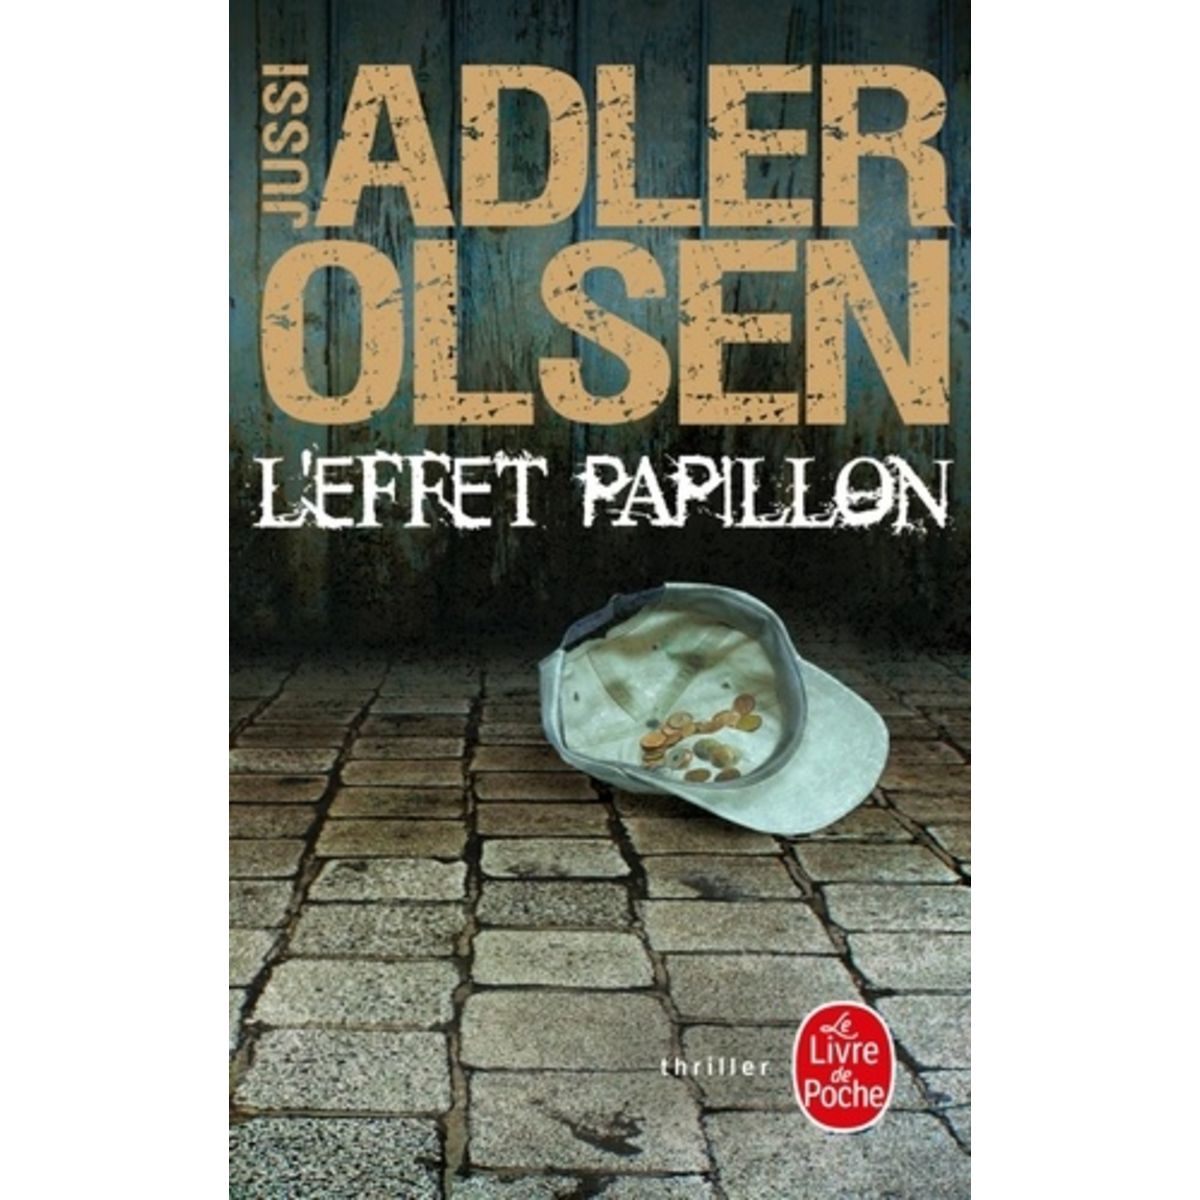  LES ENQUETES DU DEPARTEMENT V TOME 5 : L'EFFET PAPILLON, Adler-Olsen Jussi